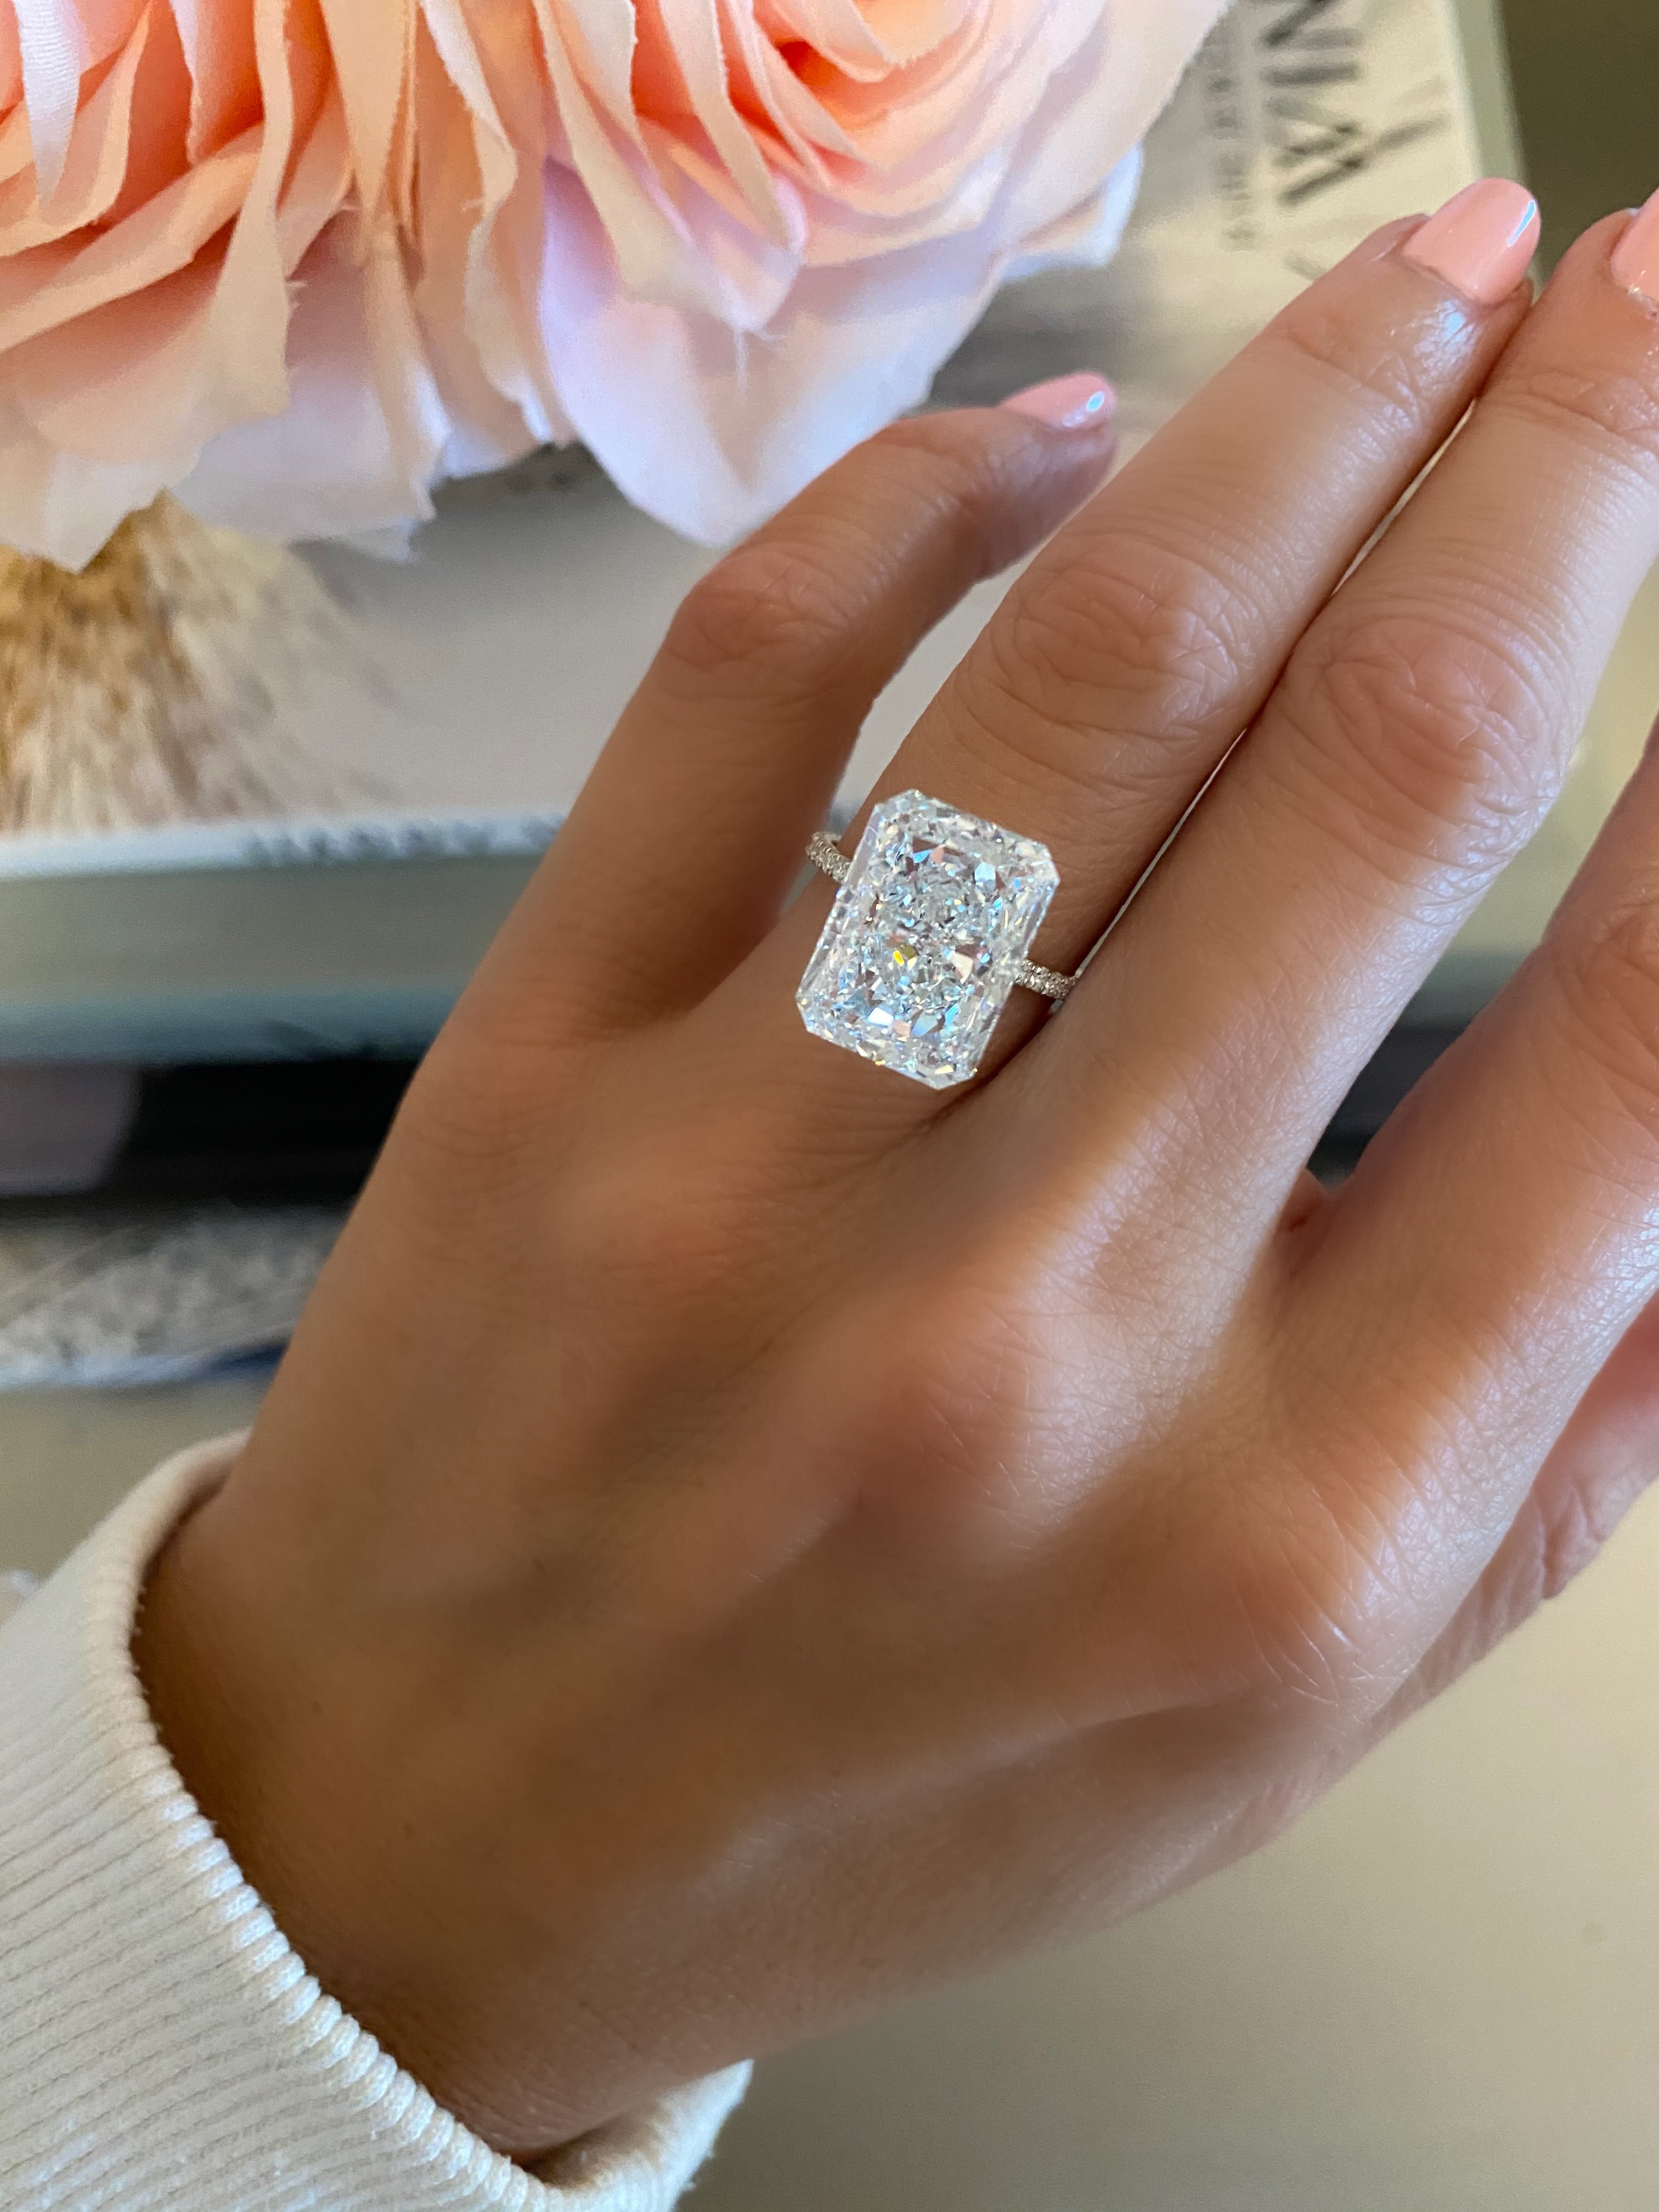 Who's Wearing an 8 Carat Diamond? | Frank Darling